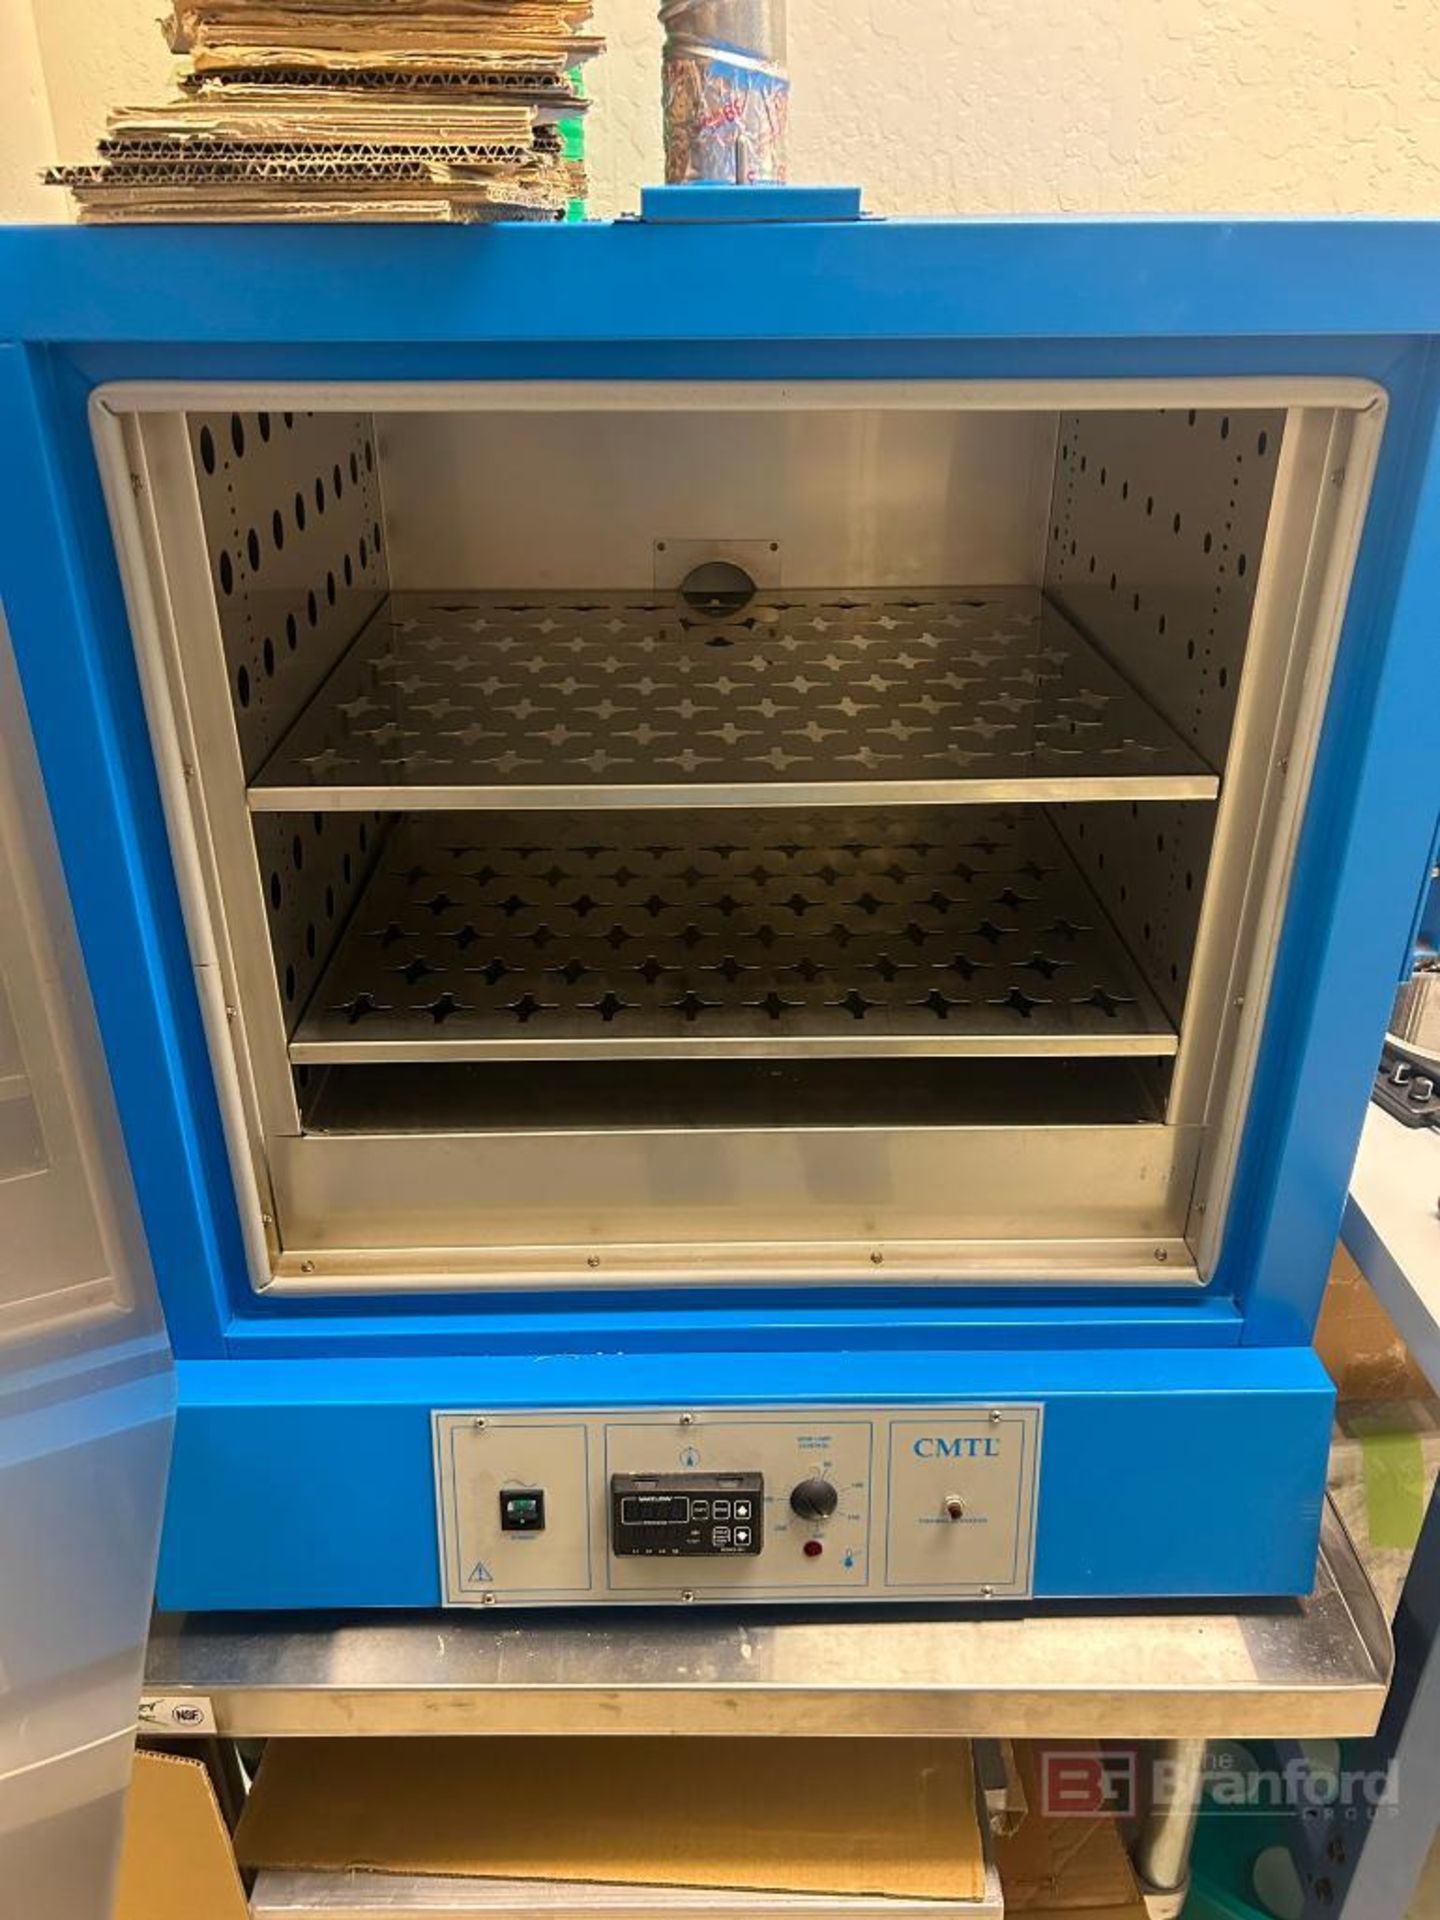 LR Environmental CMTL Bake Oven - Image 2 of 2